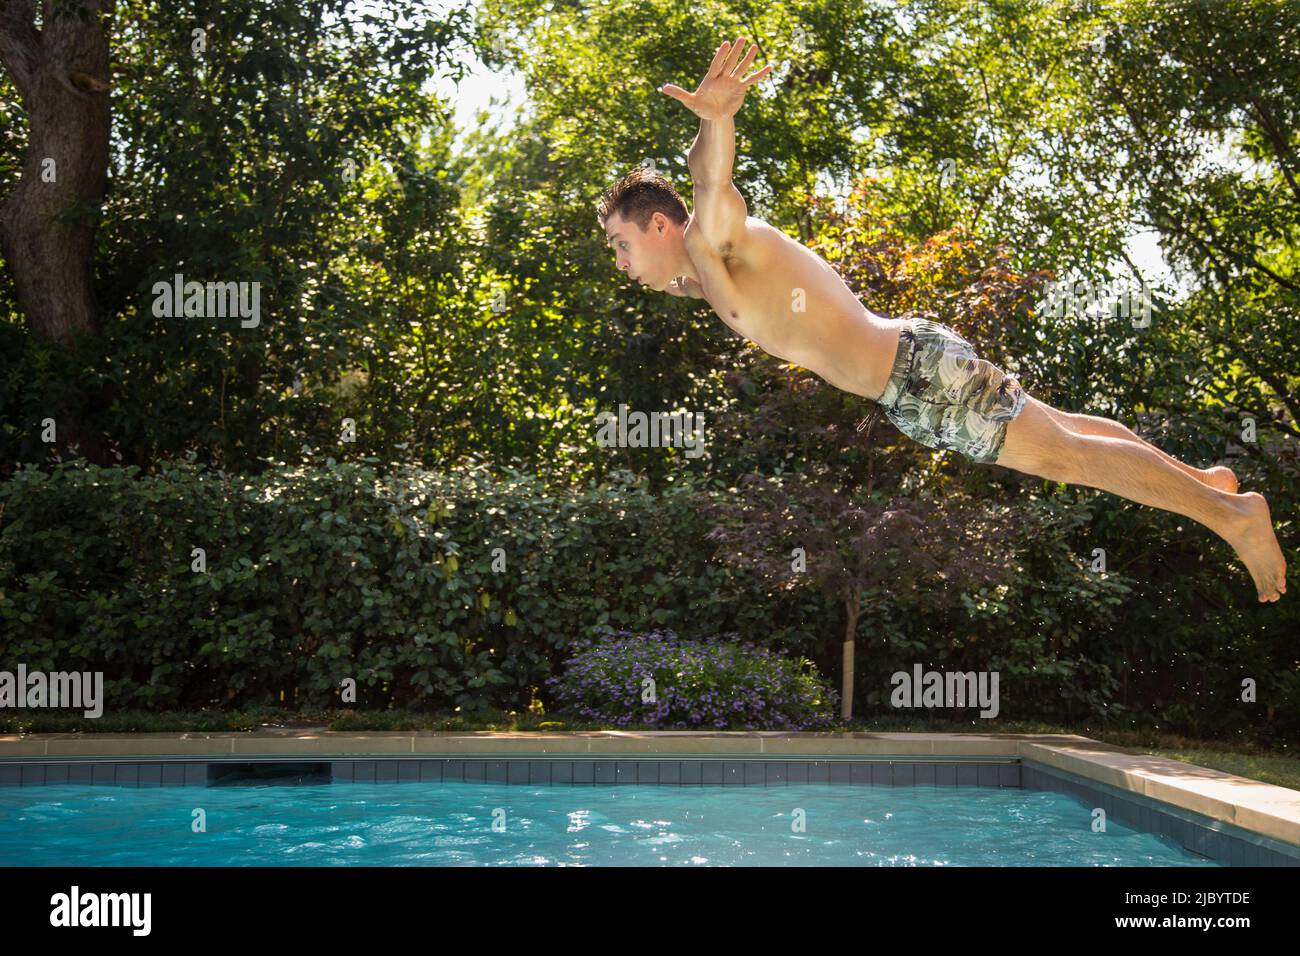 Man jumping into swimming pool Stock Photo